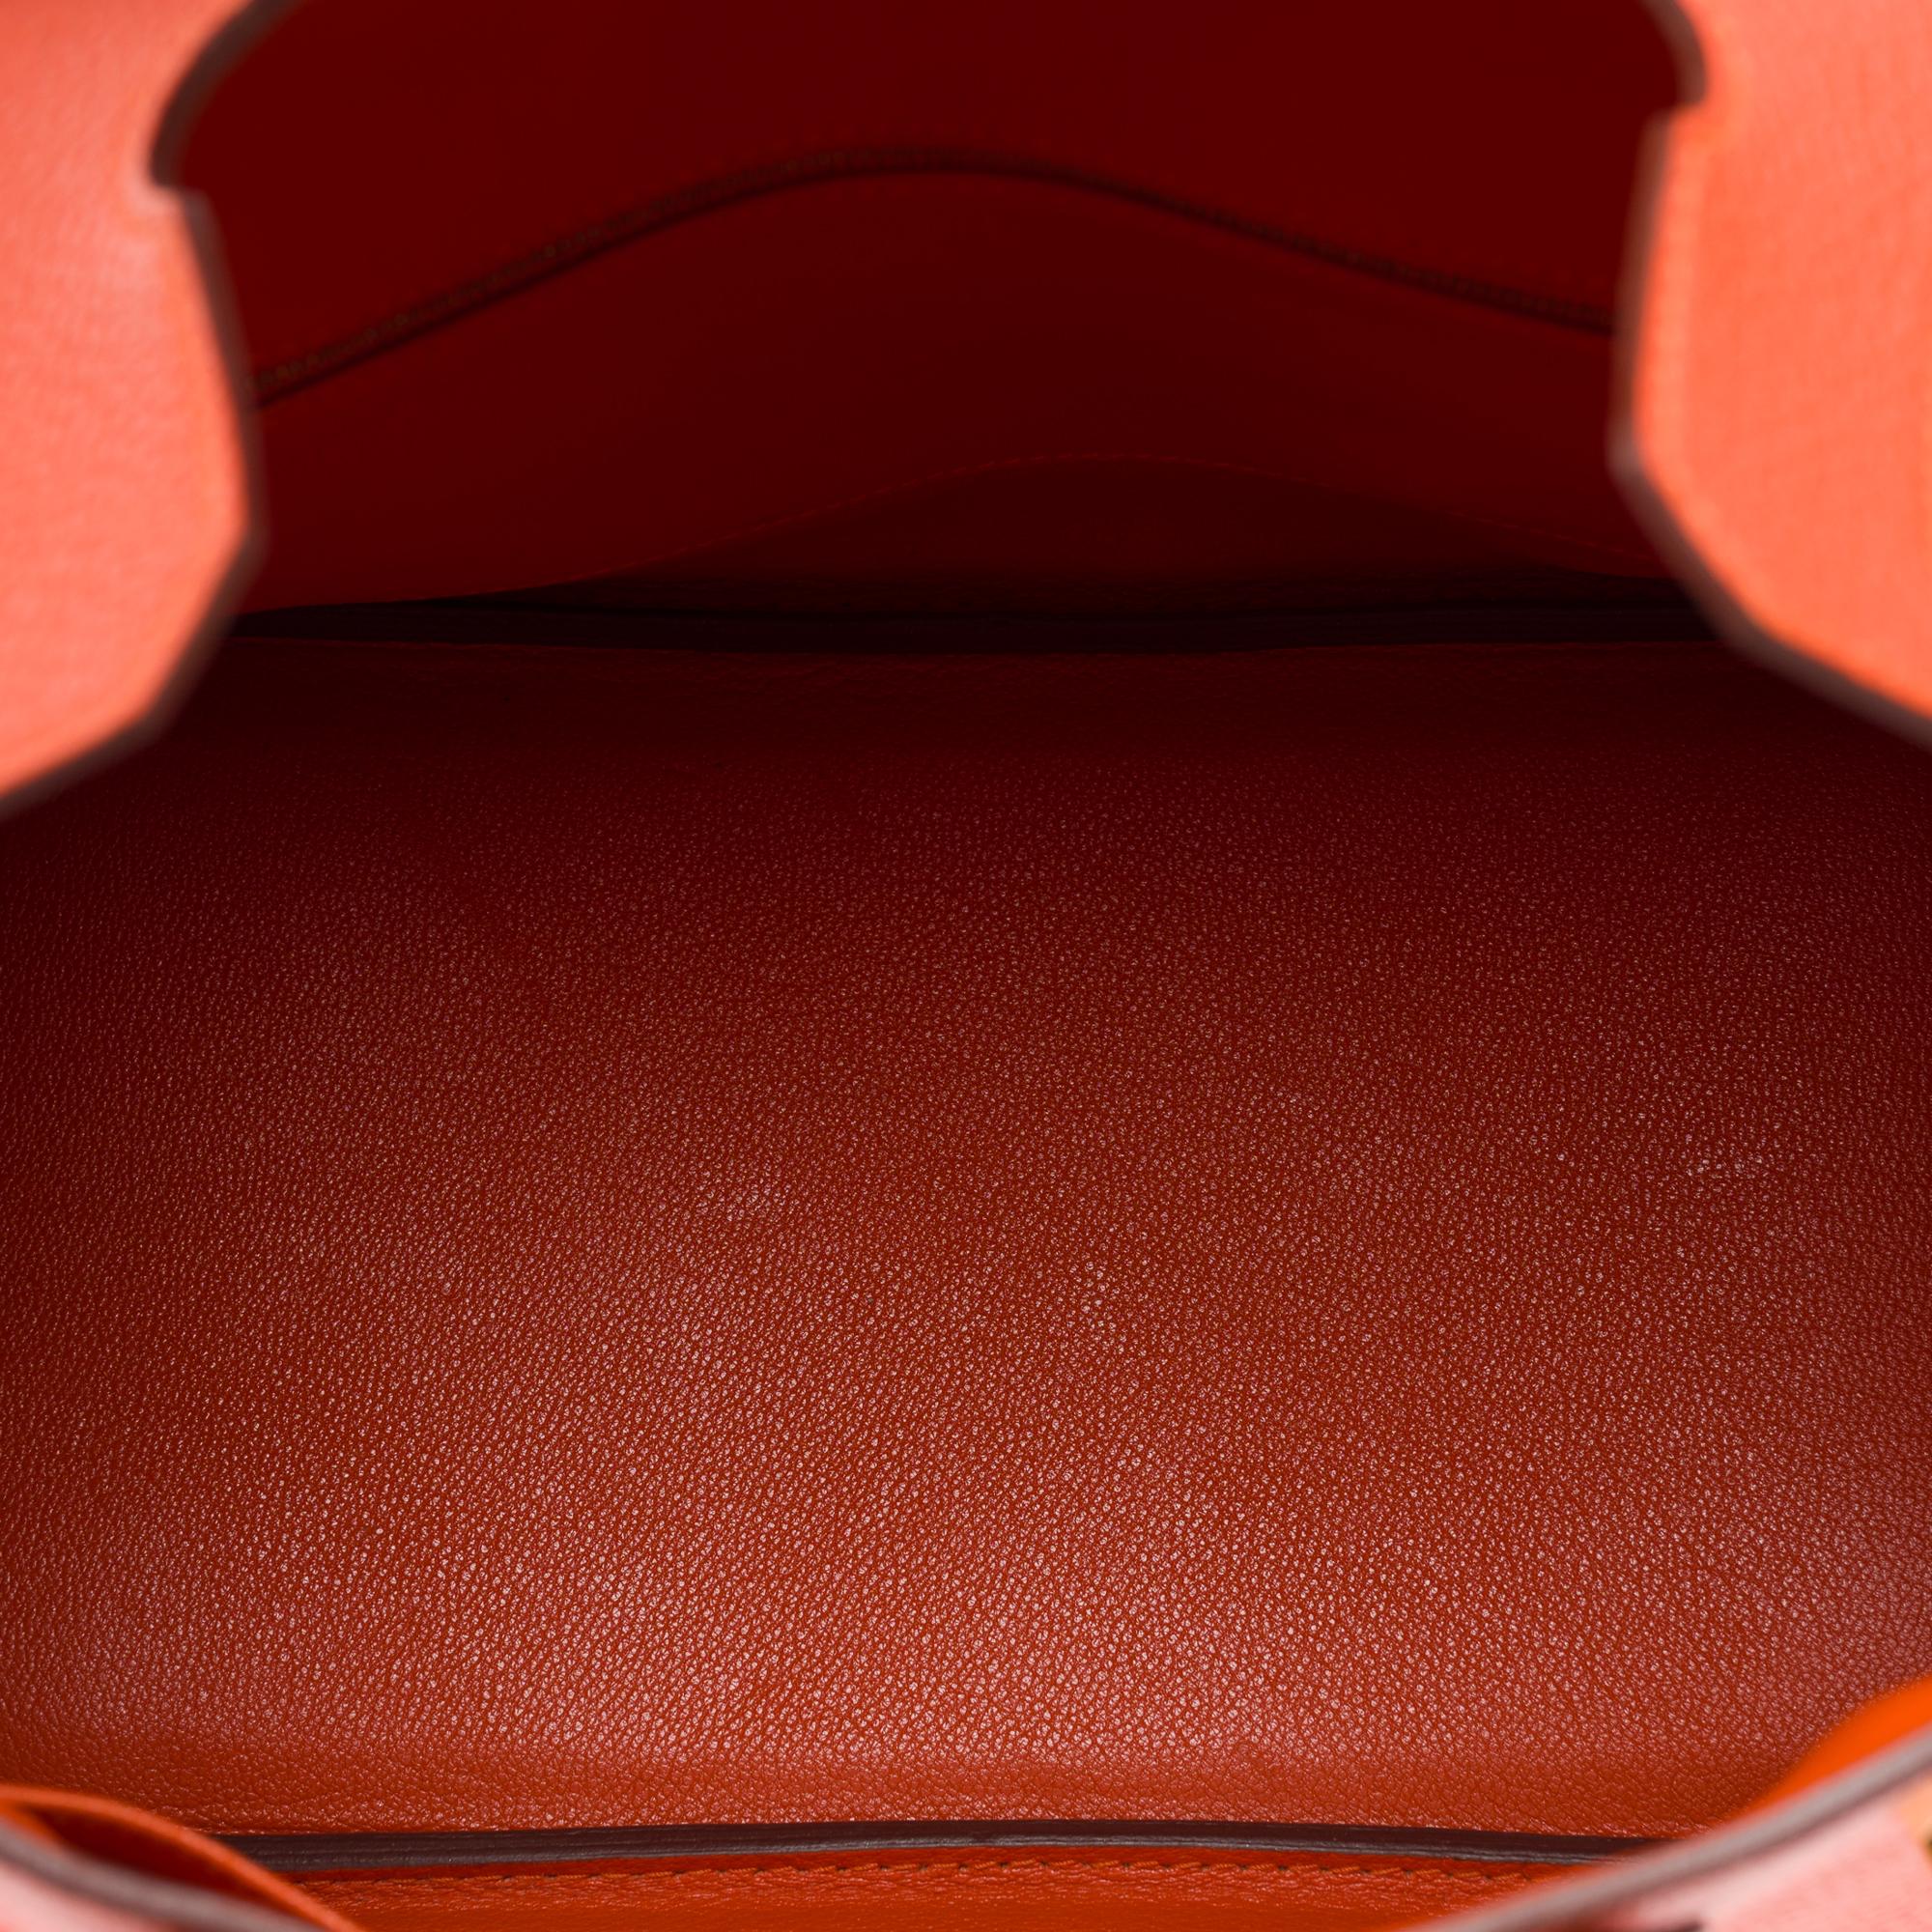 Superb Hermes Birkin 30 handbag in Taurillon Clemence Orange Poppy leather, GHW For Sale 3